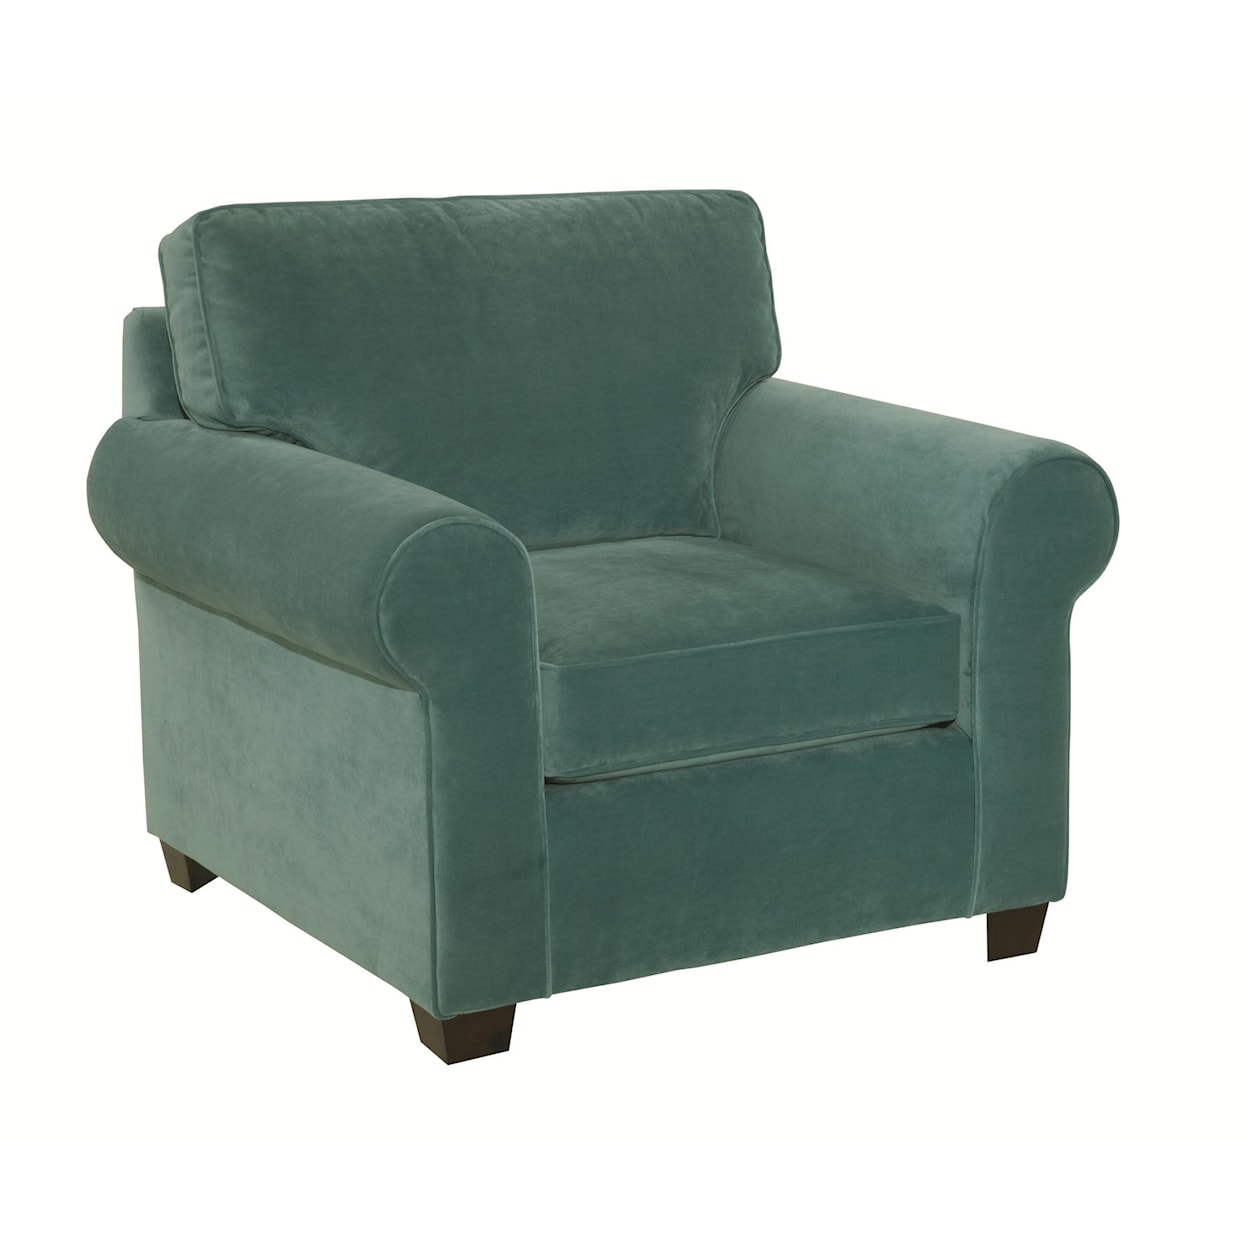 Kincaid Furniture Brannon Upholstered Chair